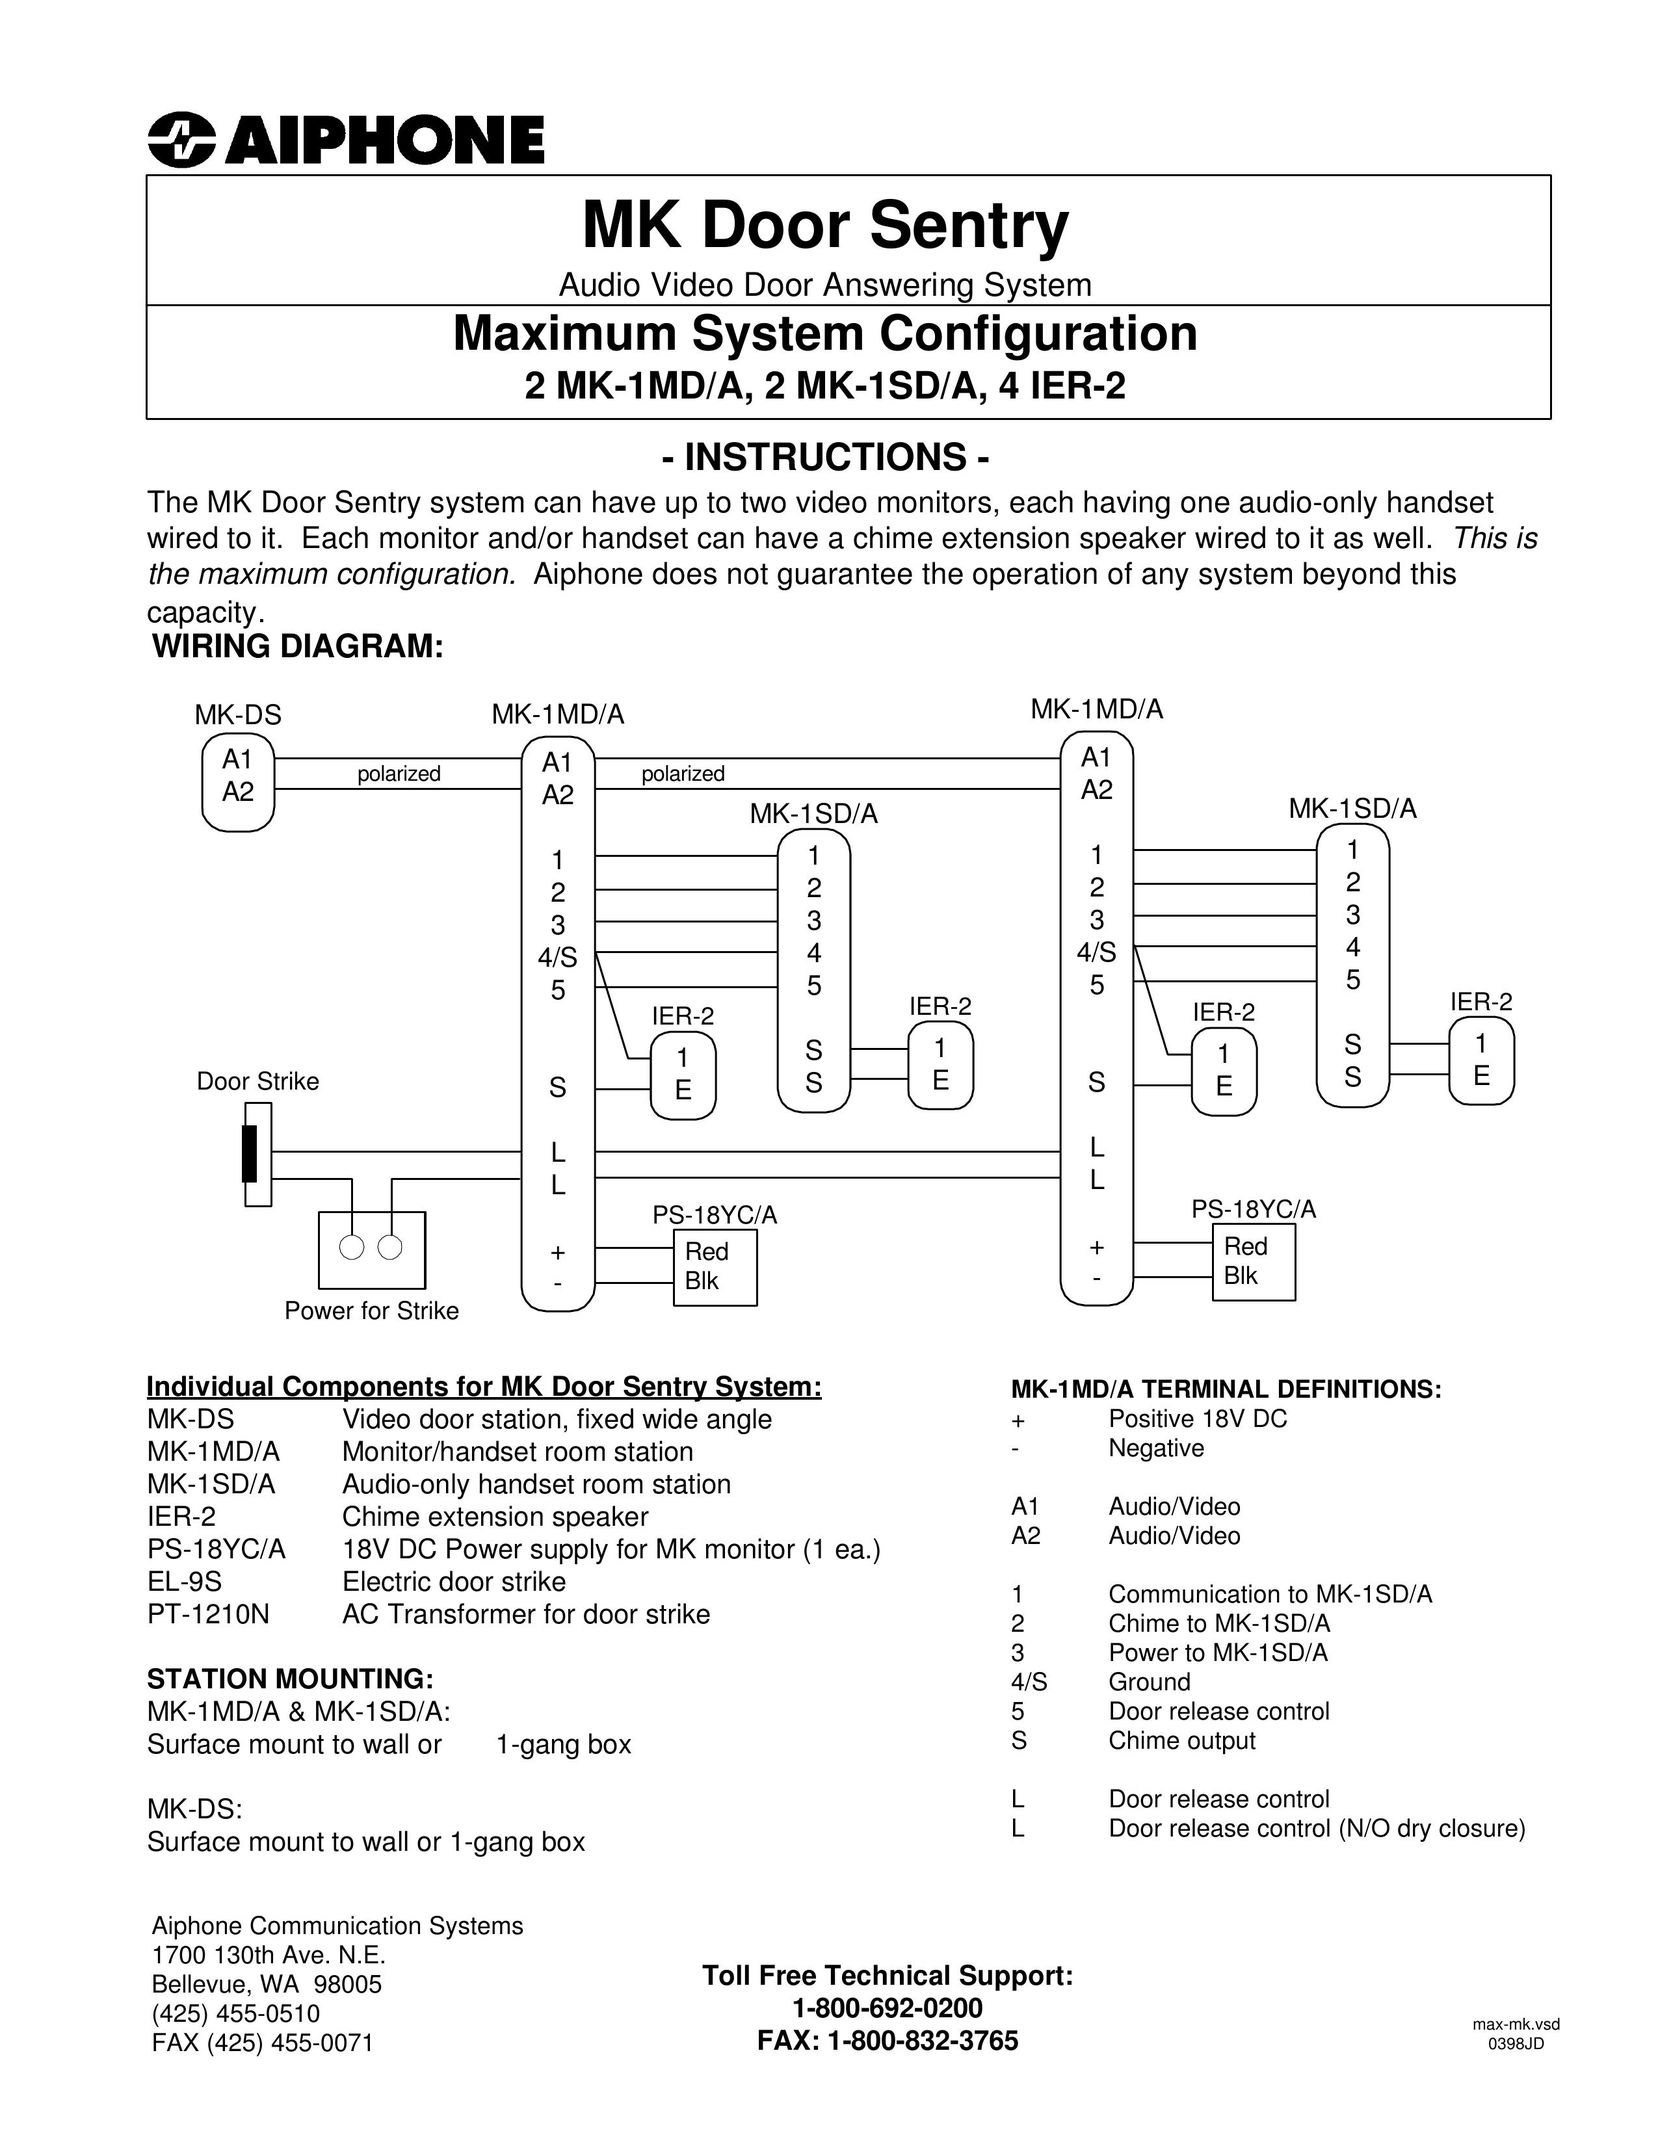 Aiphone 2 MK-1MD/A Intercom System User Manual